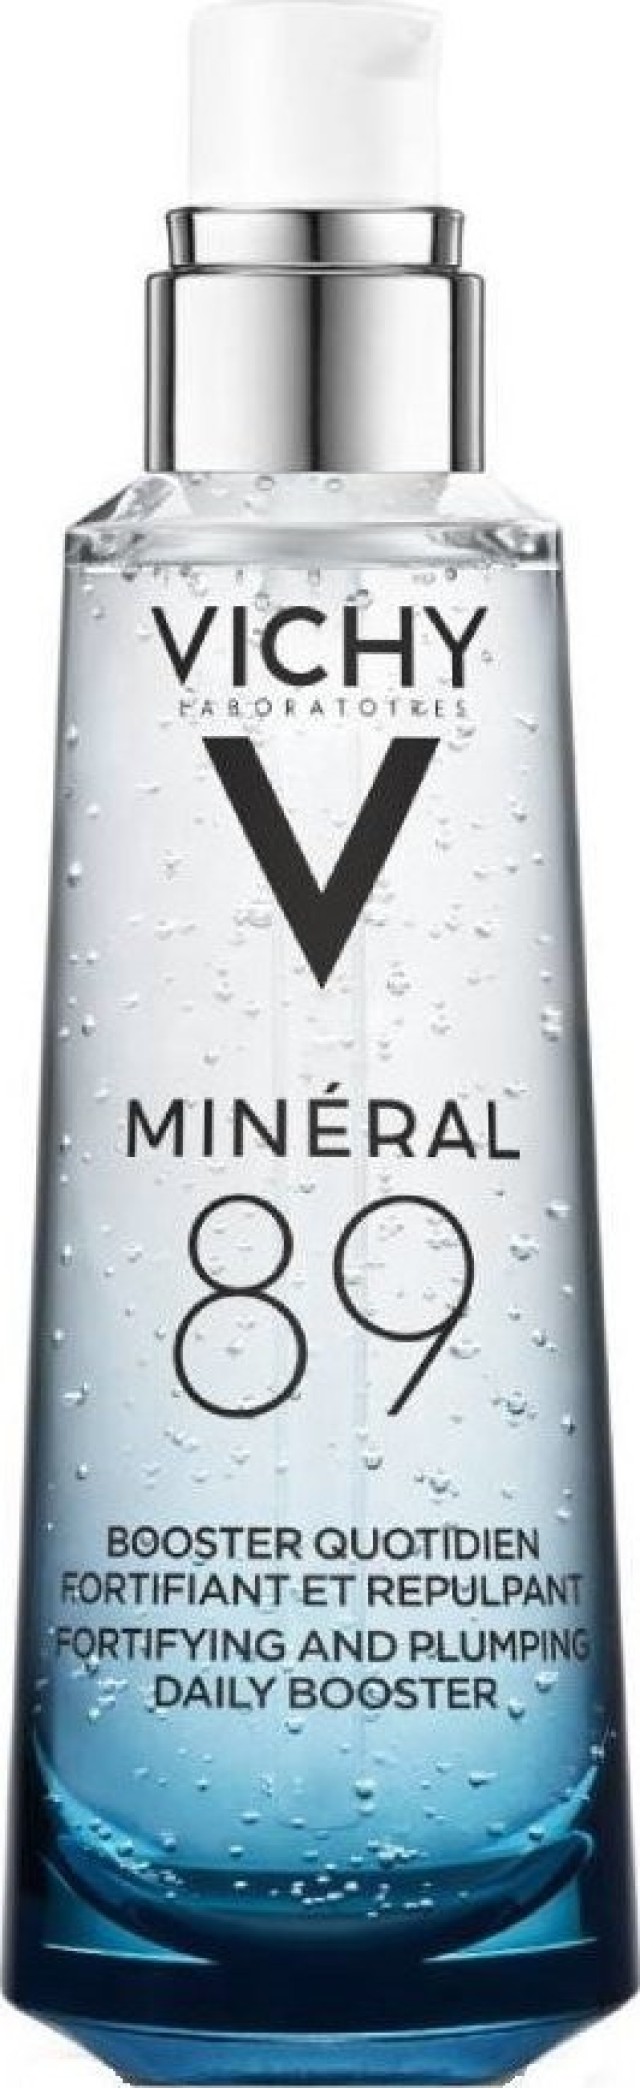 Vichy Mineral 89 Ενυδατικό Booster 50ml